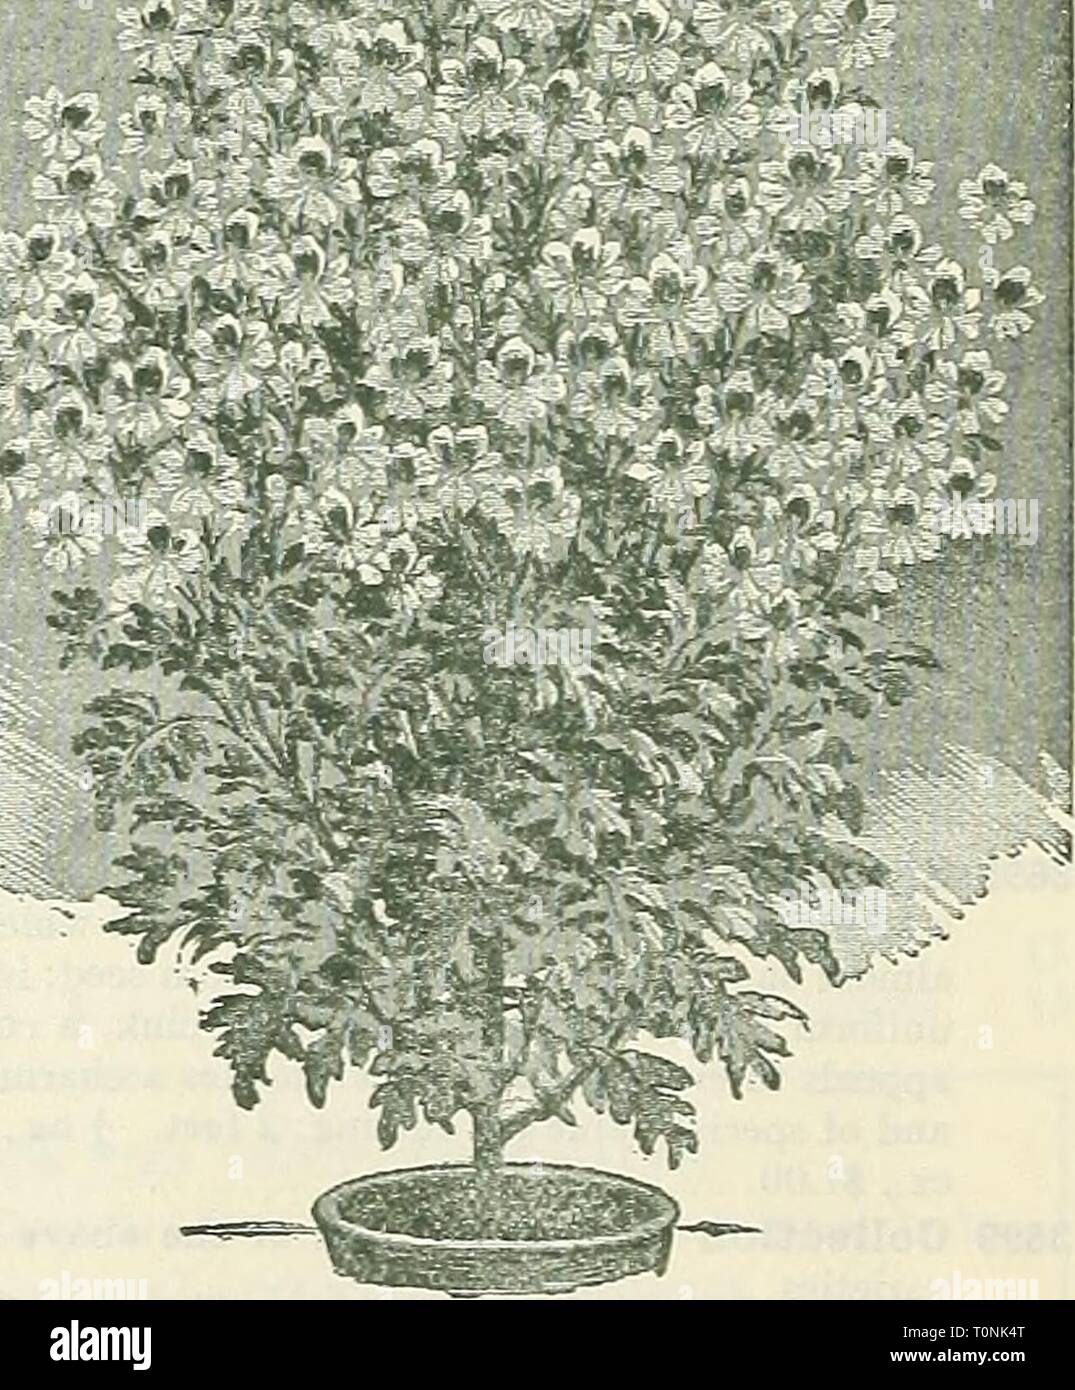 Dreer's abridged list 1930 (1930) Dreer's abridged list 1930  dreersabridgedli1930henr Year: 1930  Schizanthus Wisetonensis Stock Photo